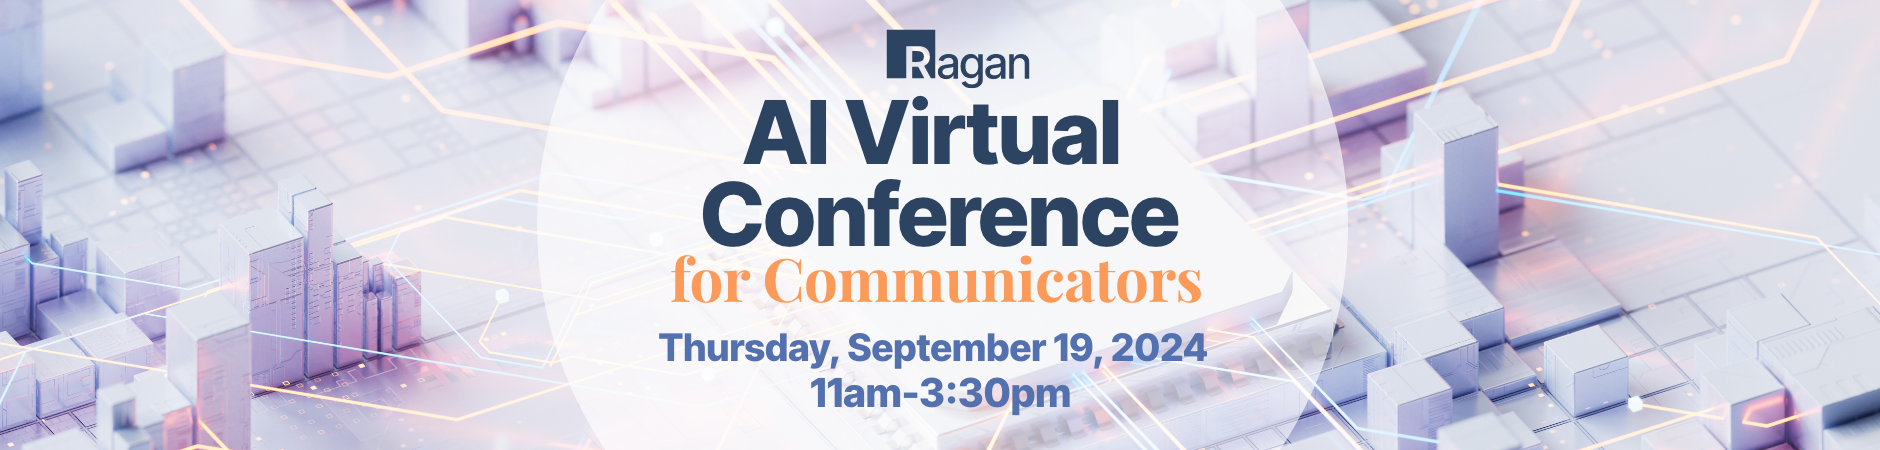 AI Virtual Conference for Communicators